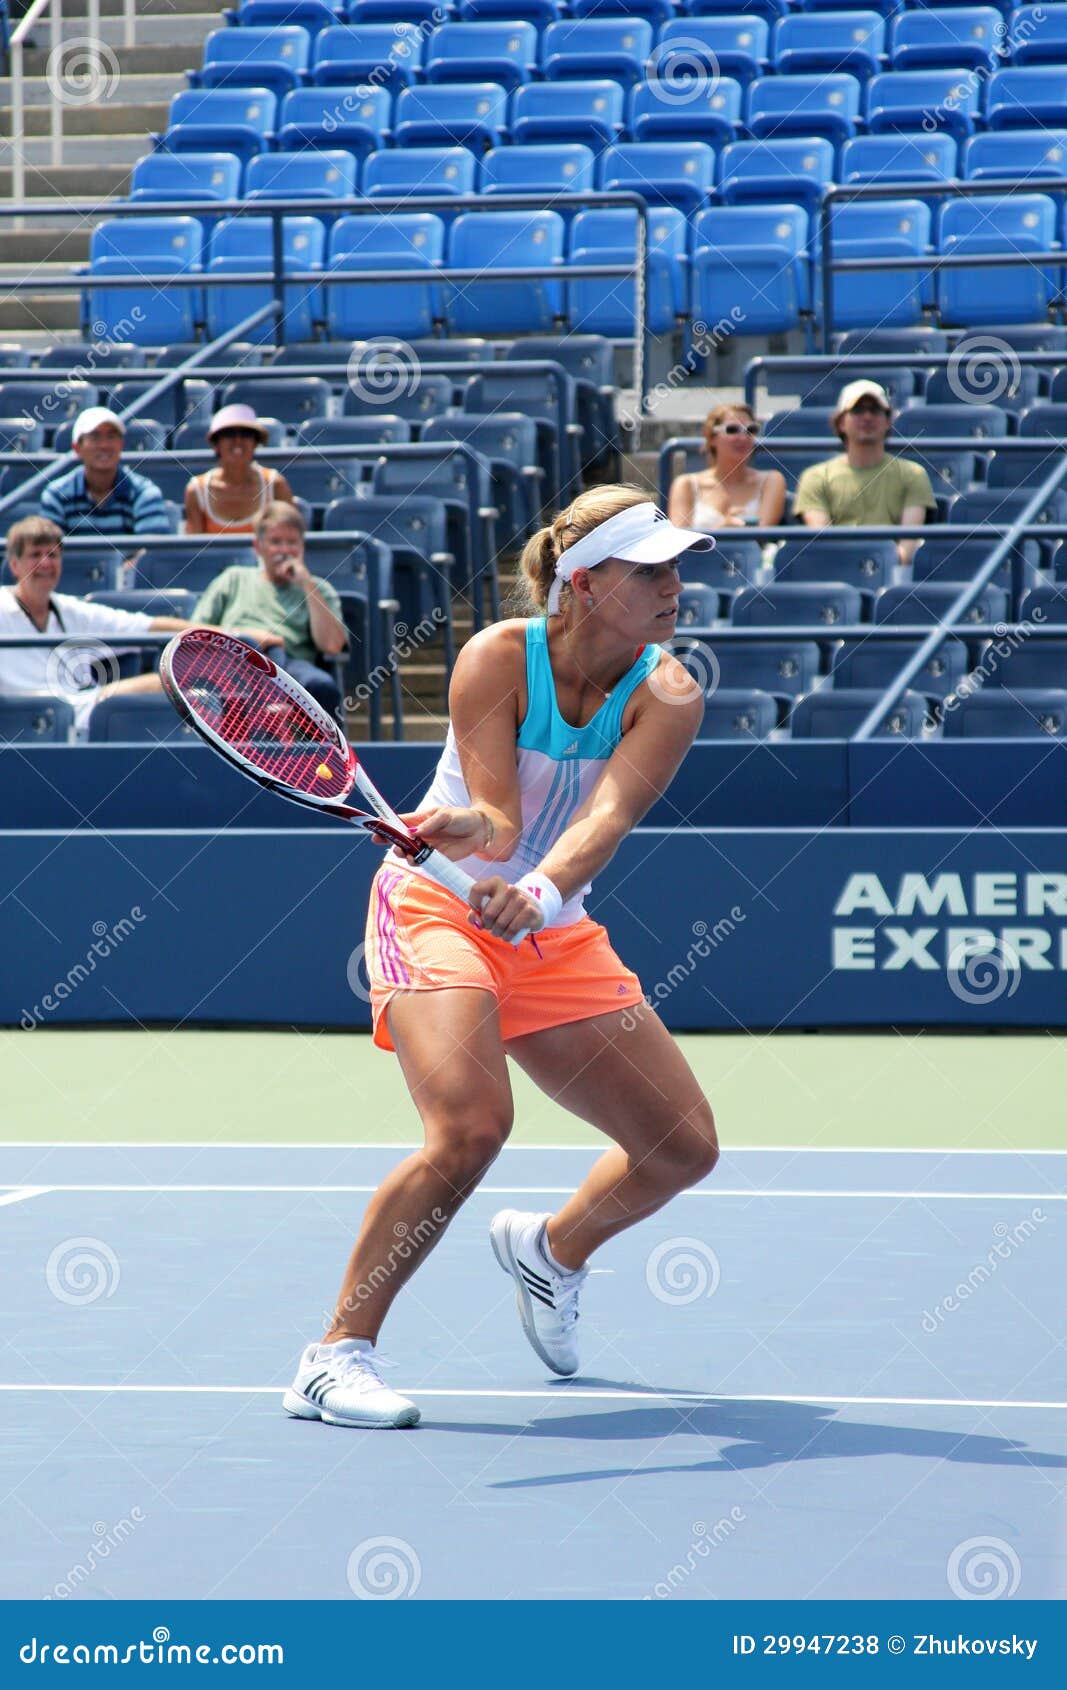 Professional Tennis Player Angelique Kerber Practices for US Open ...